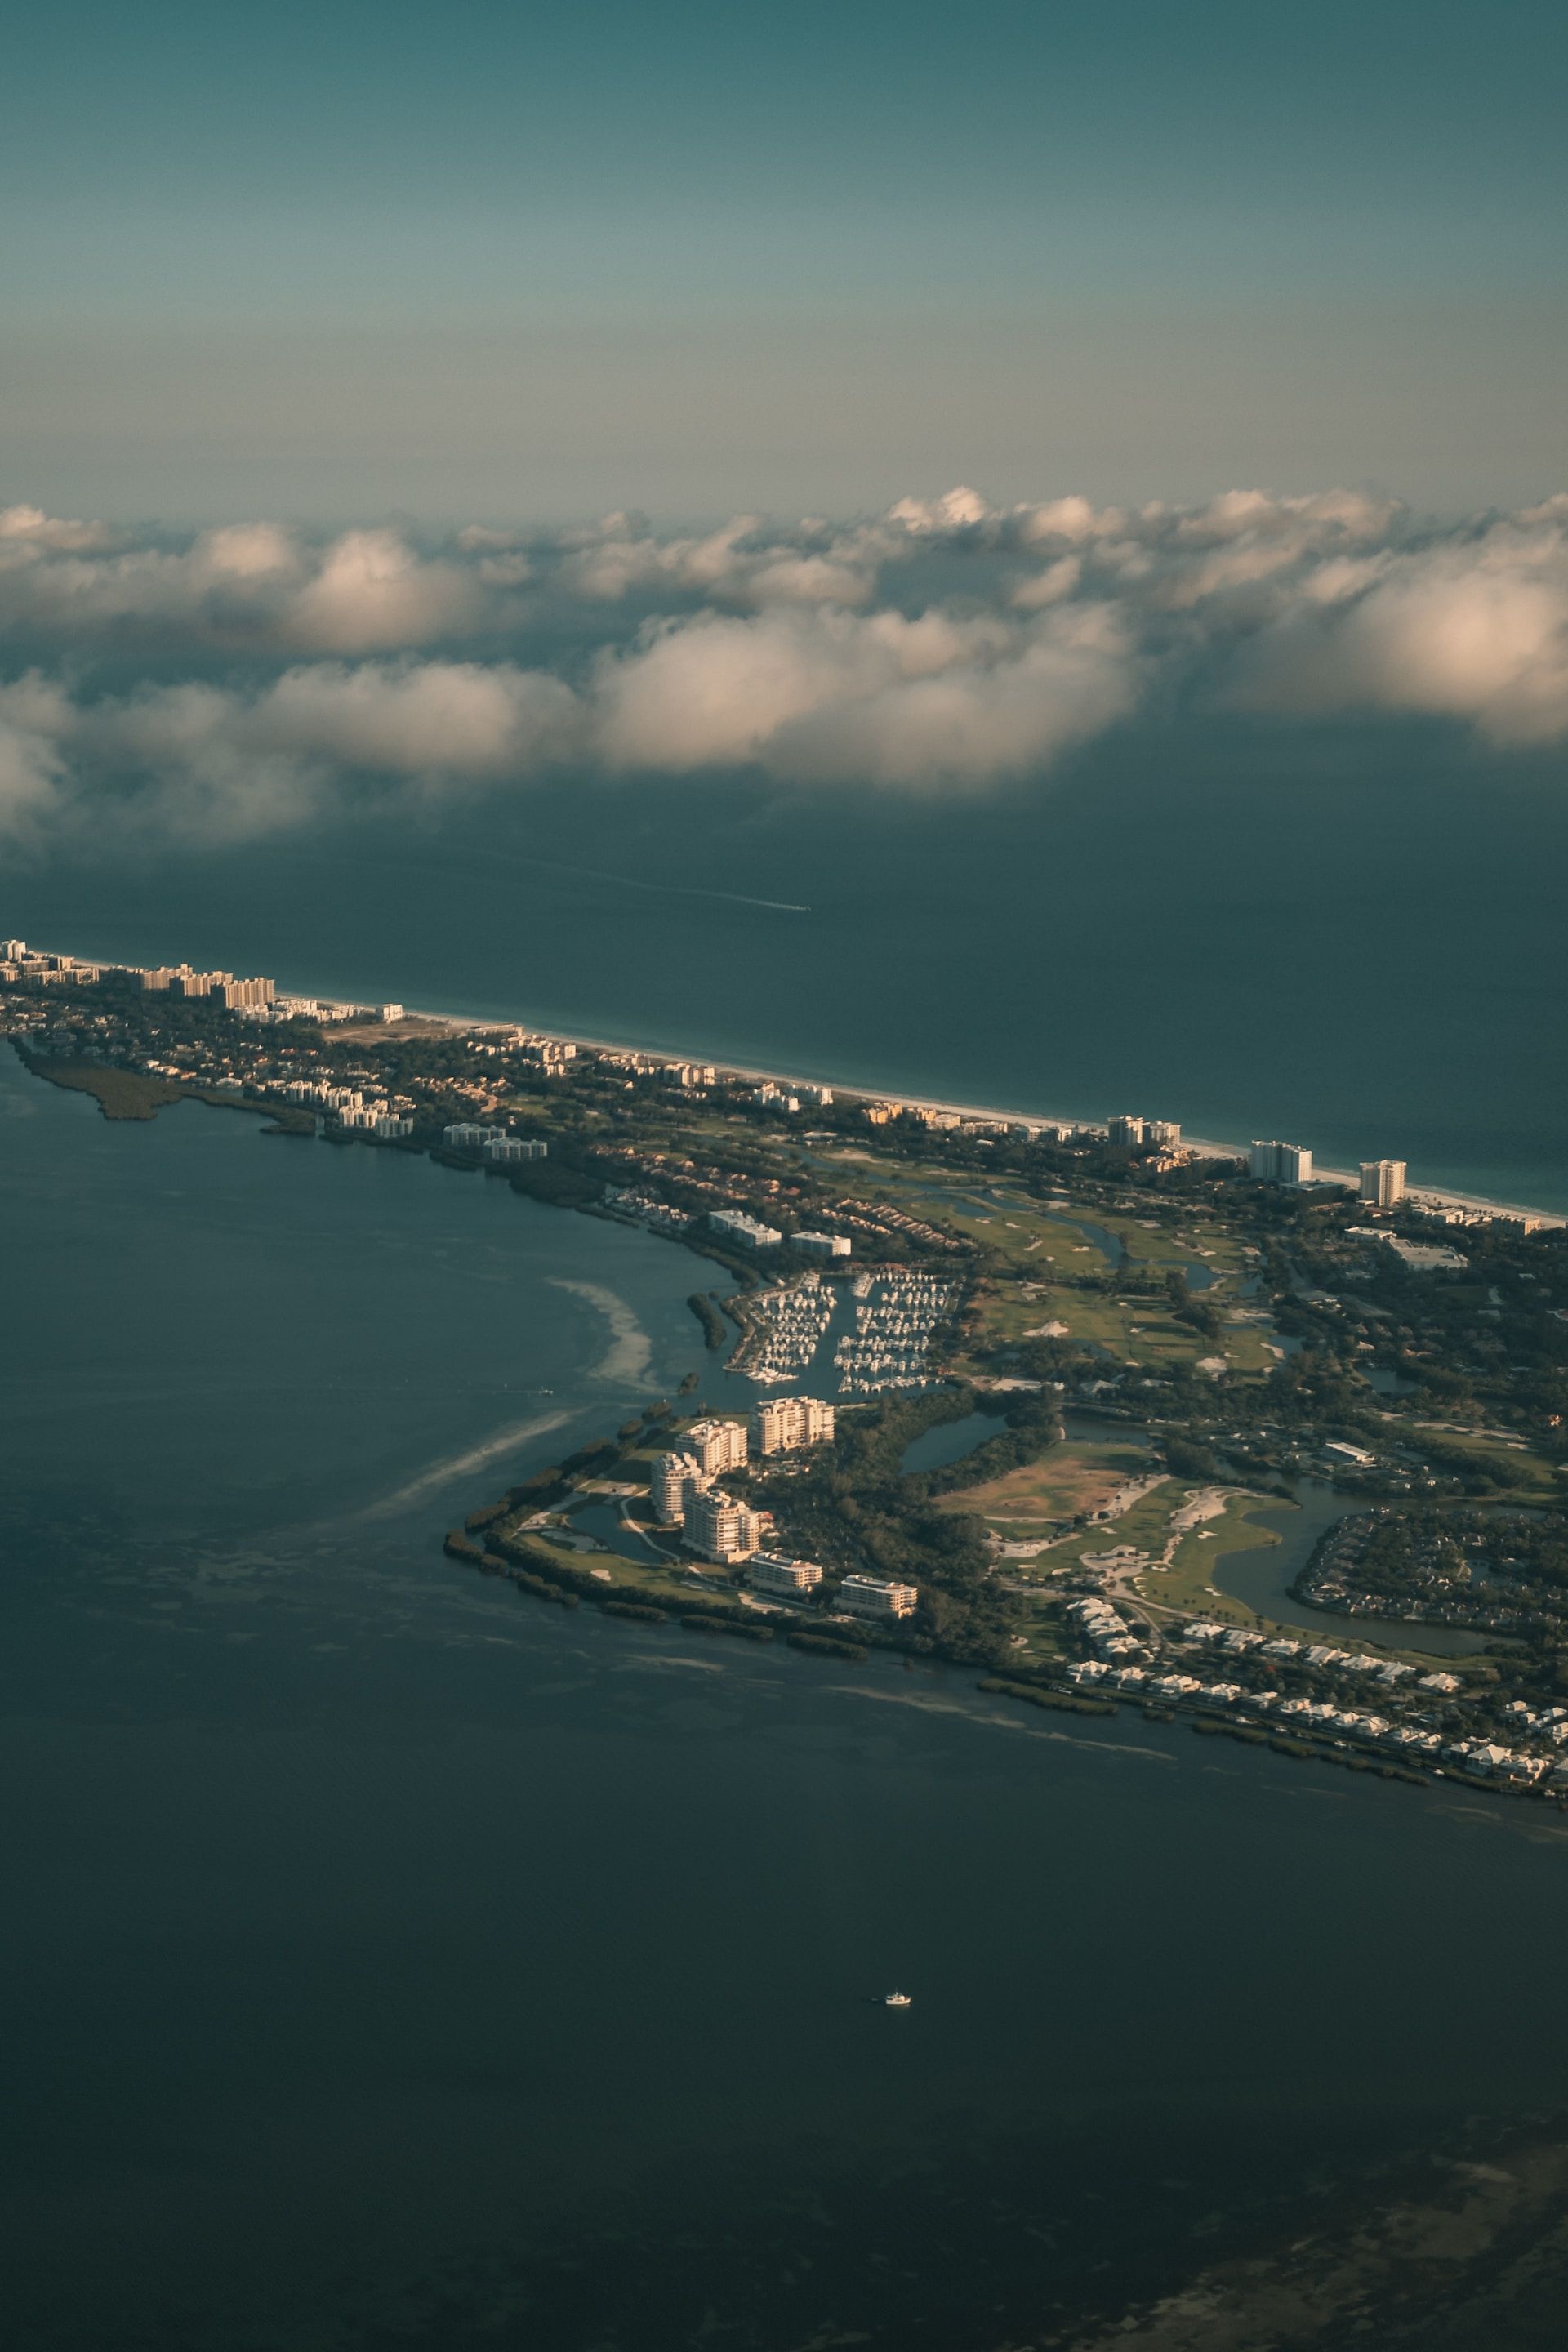 Aerial view of the coast of Sarasota